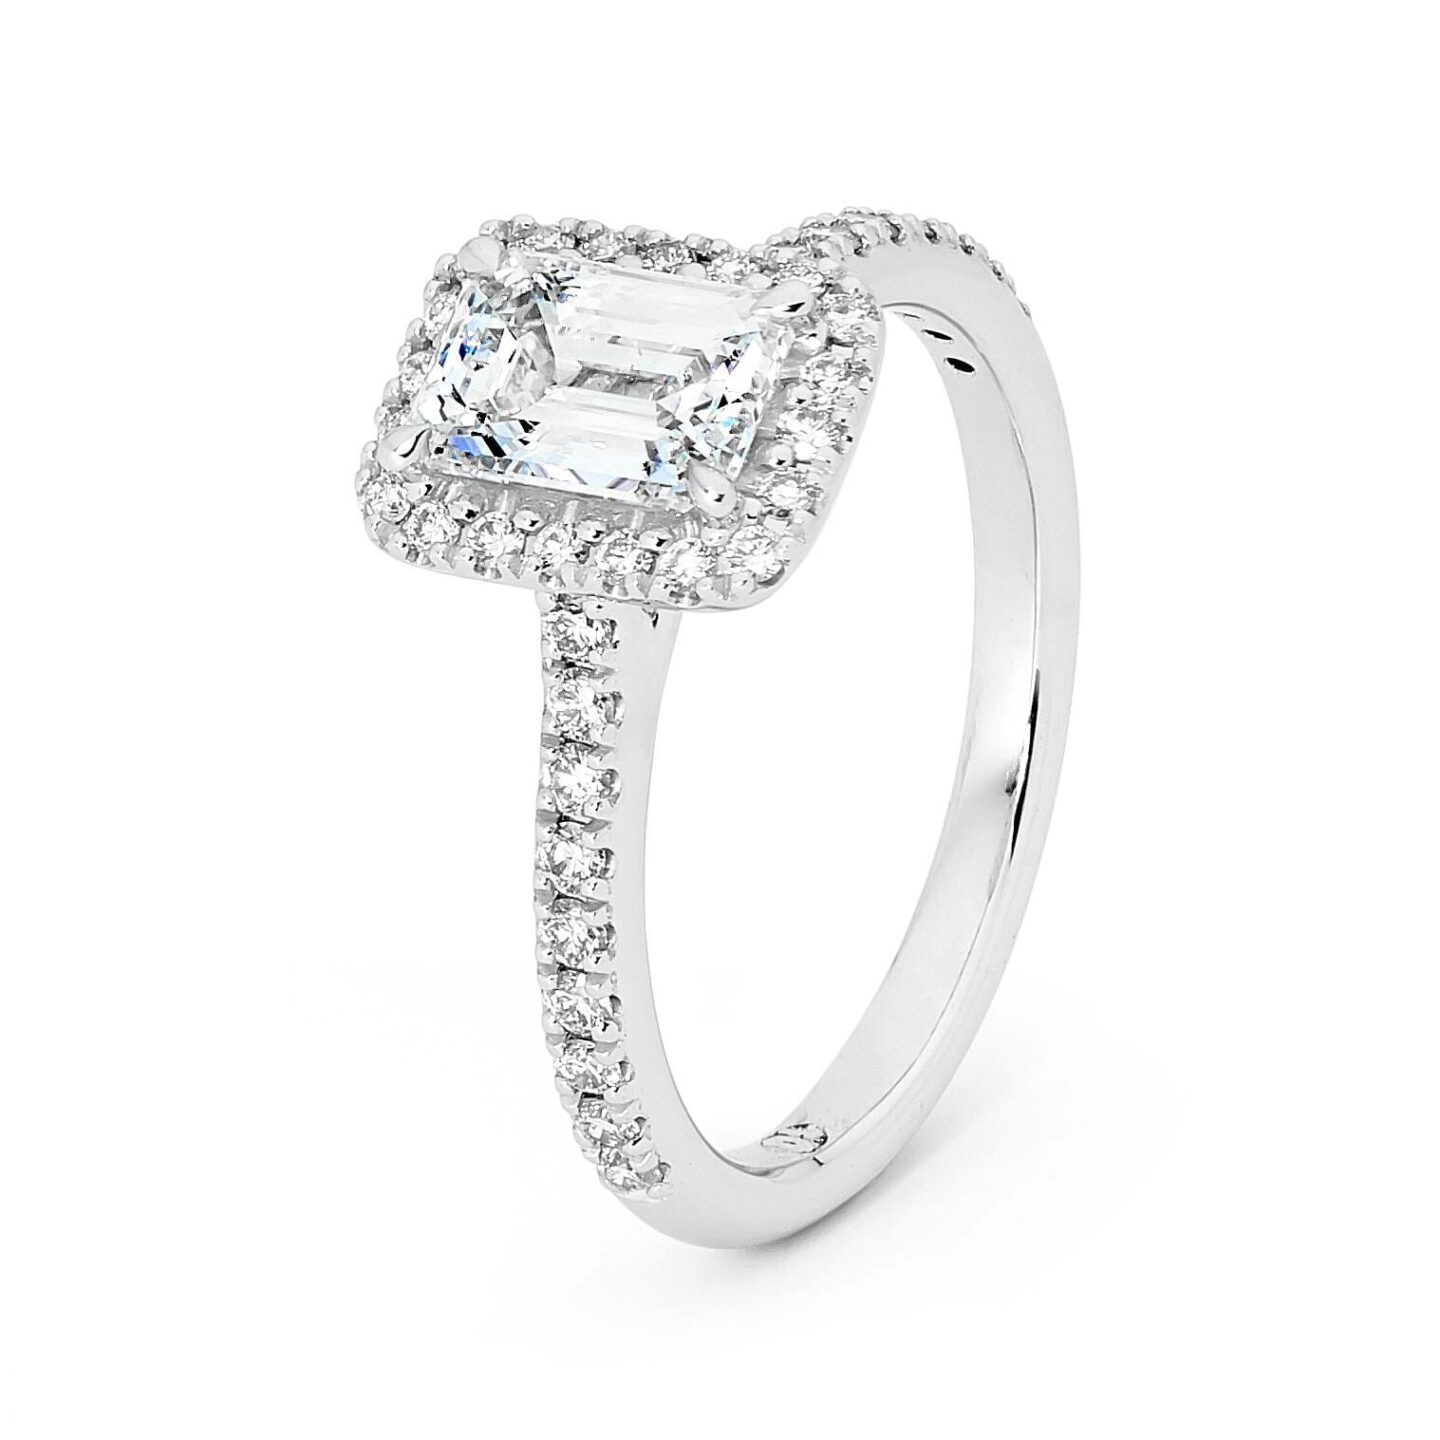 Estelle – Emerald Cut Diamond Engagement Ring